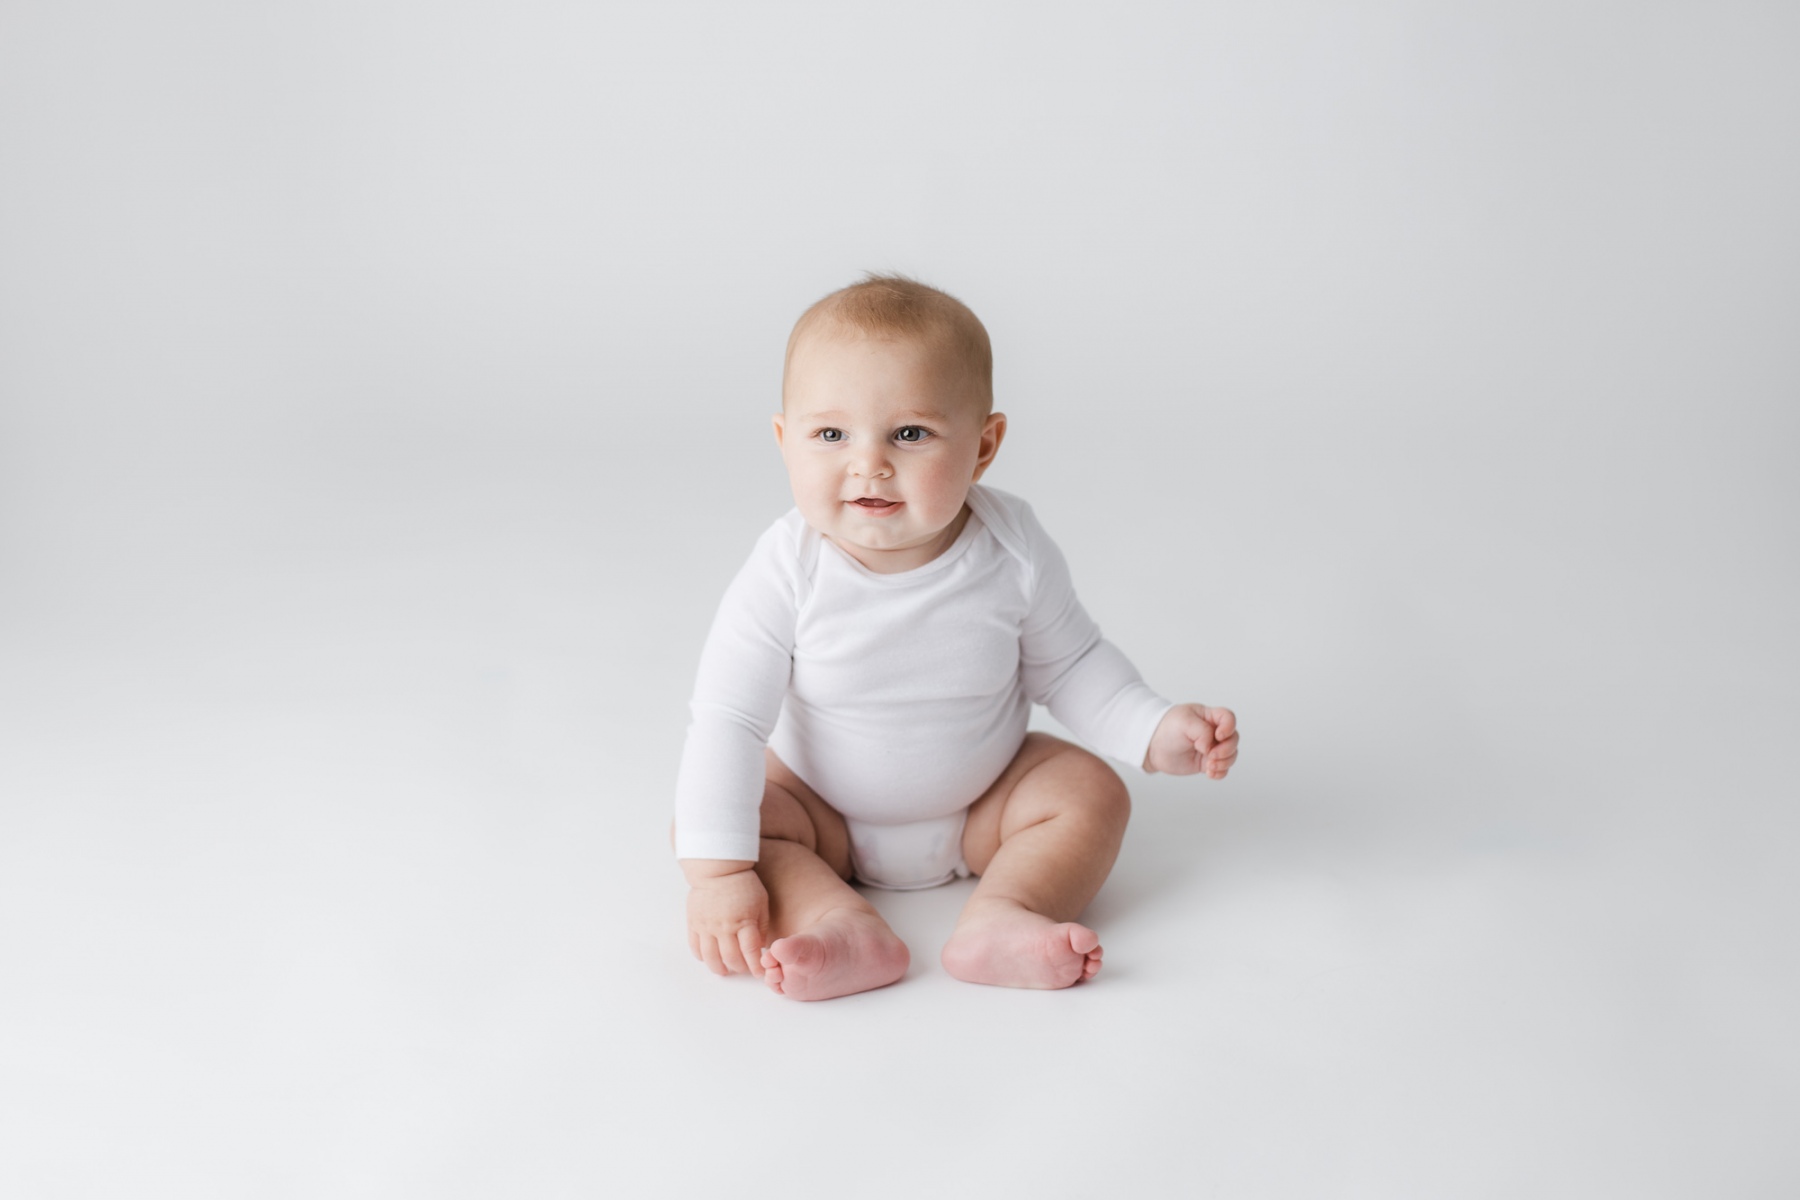 Premium Photo | Sweet Baby Poses For Camera